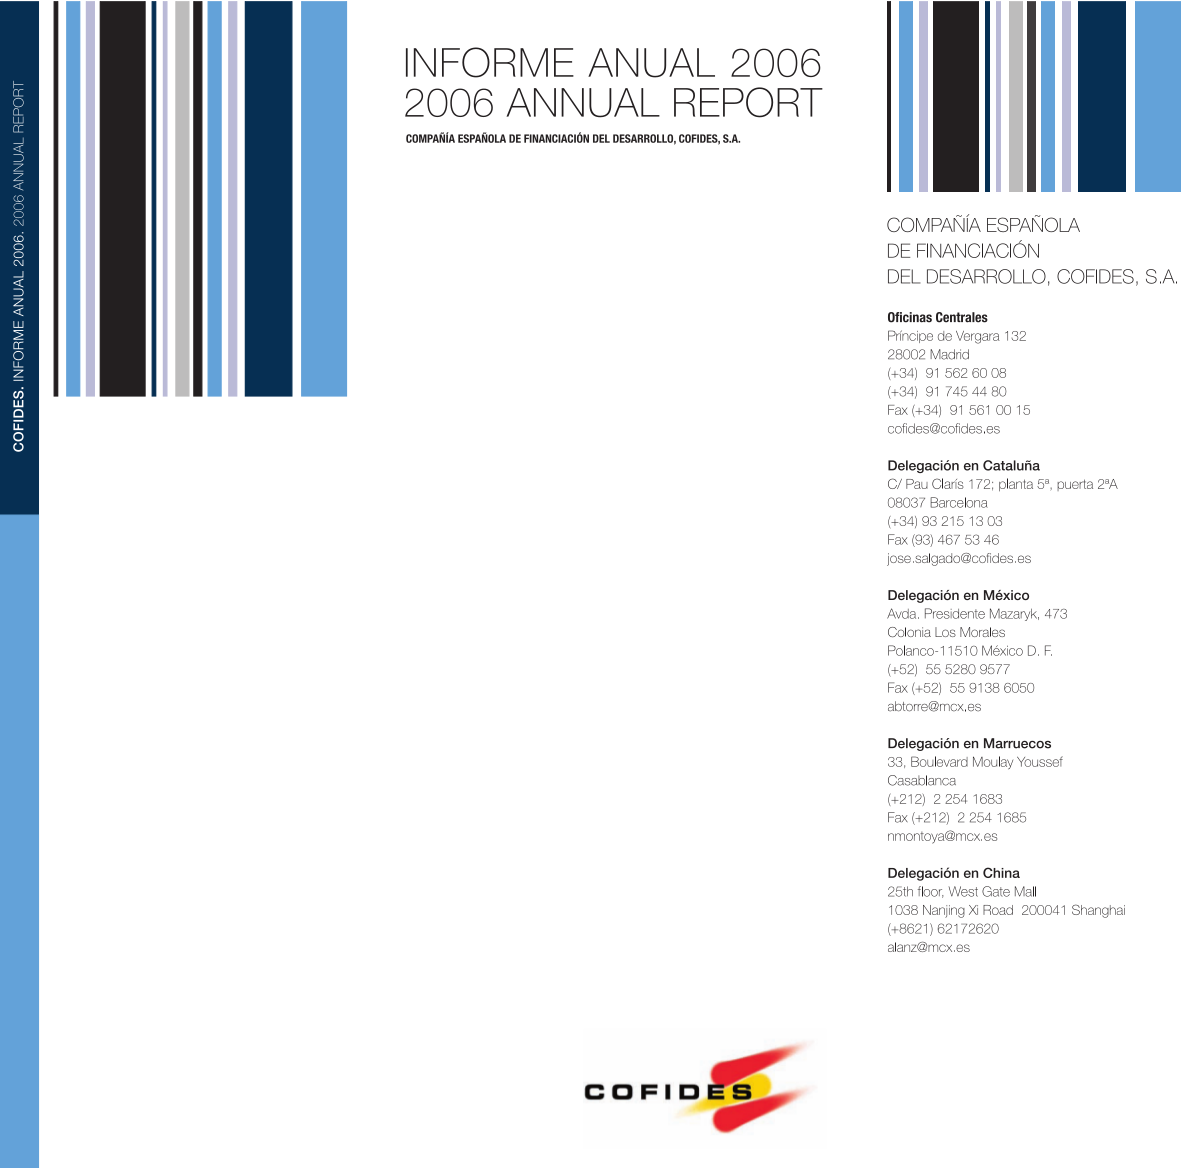 Informe Anual 2006 COFIDES